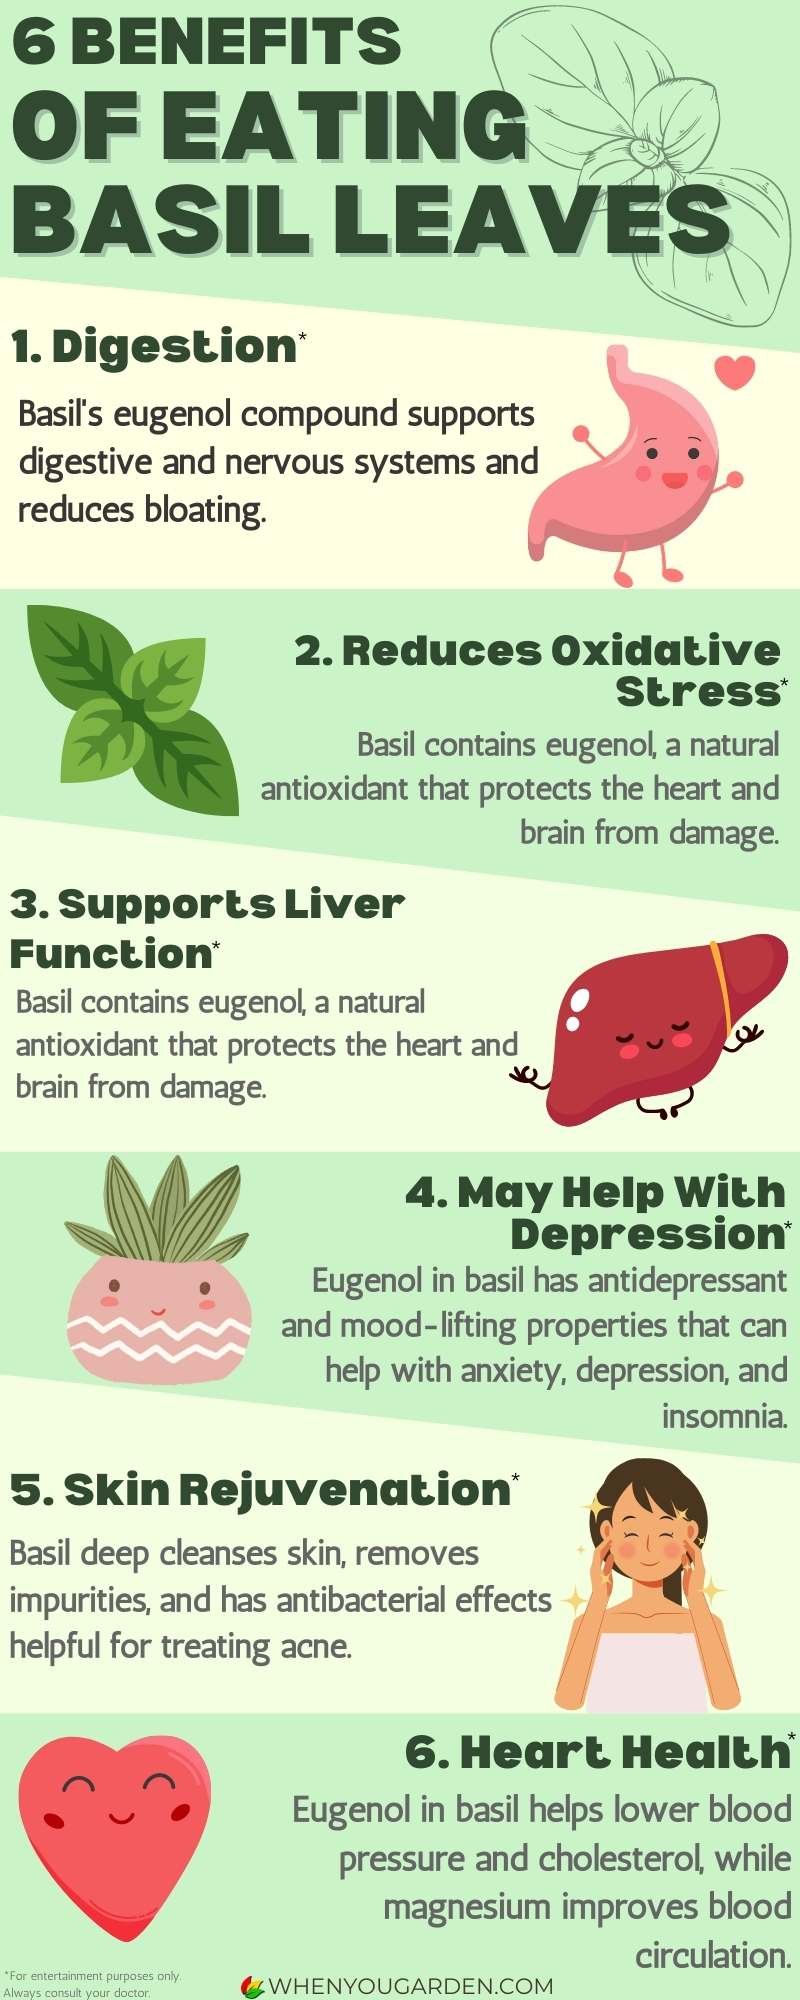 benefits of Eating Basil Leaves